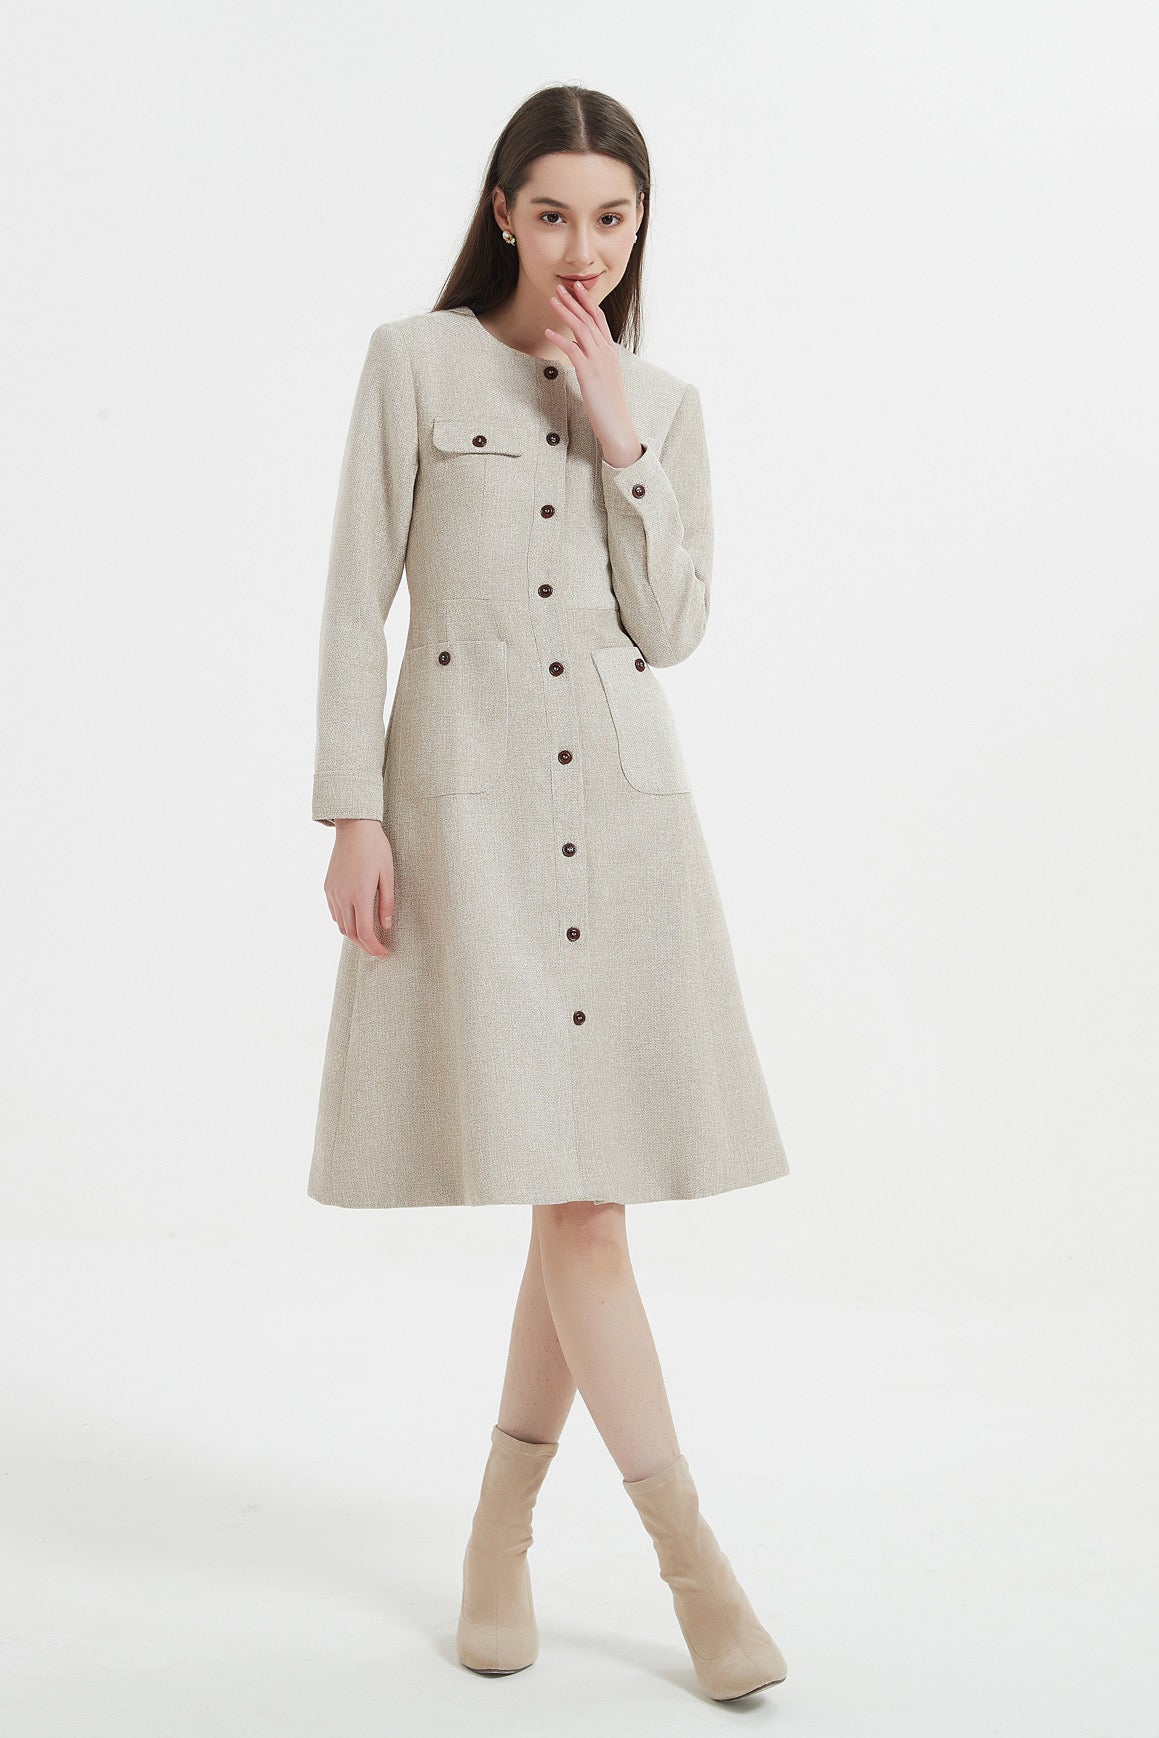 SKYE Shop Chic Modern Elegant Timeless Women Clothing French Parisian Minimalist Emilia Tweed Midi Dress 2